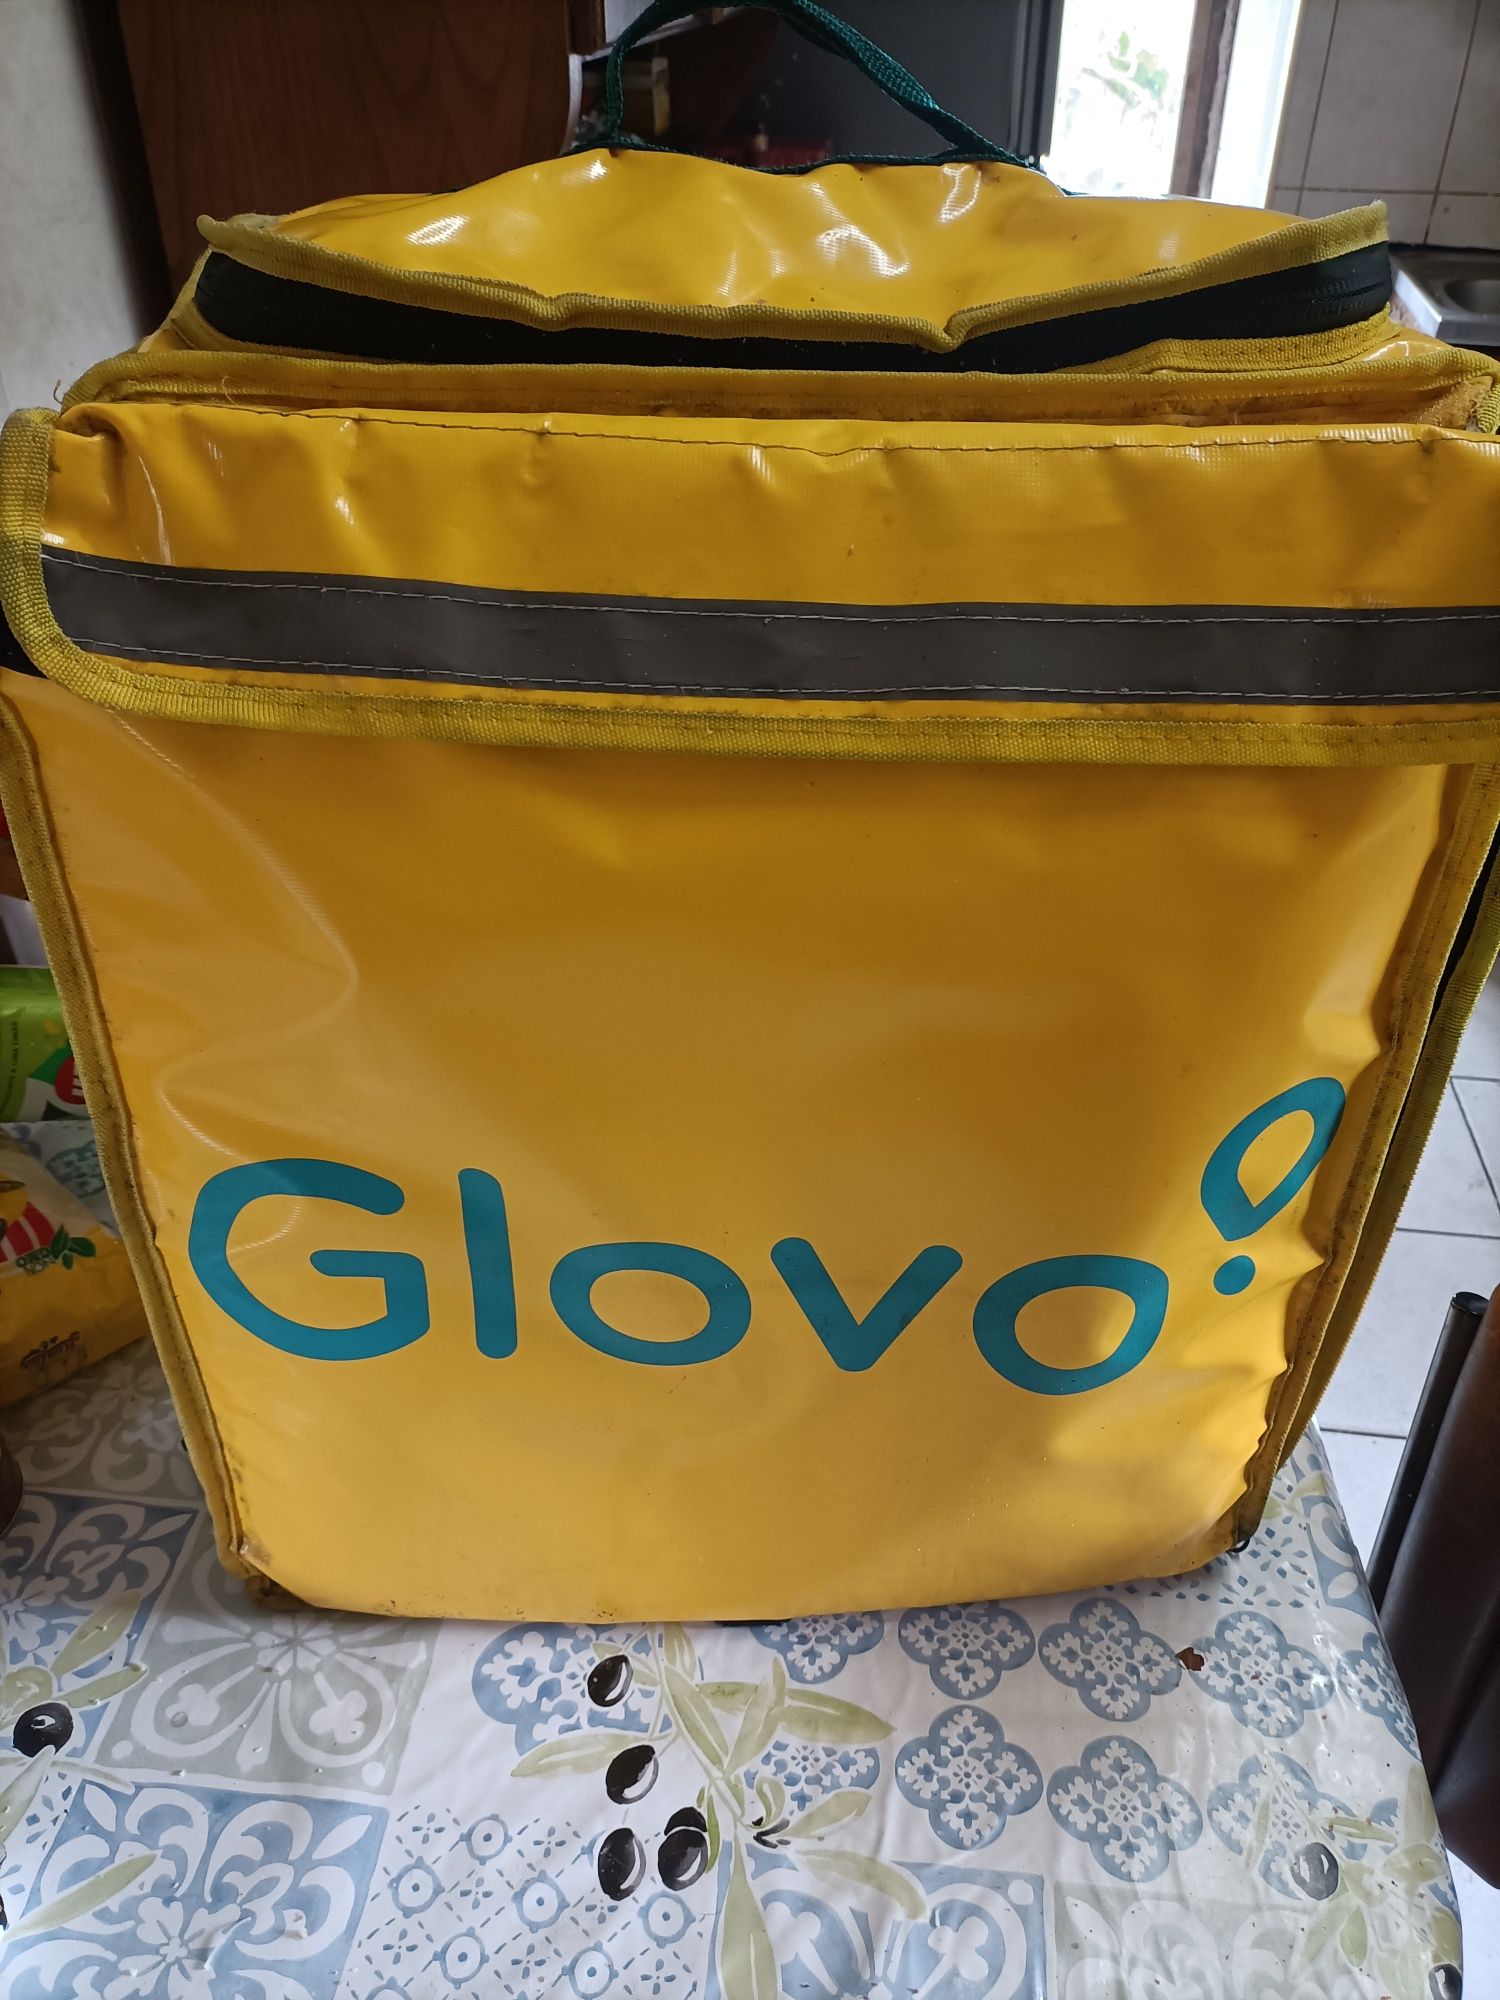 Vendo mochila globo totalmente nova